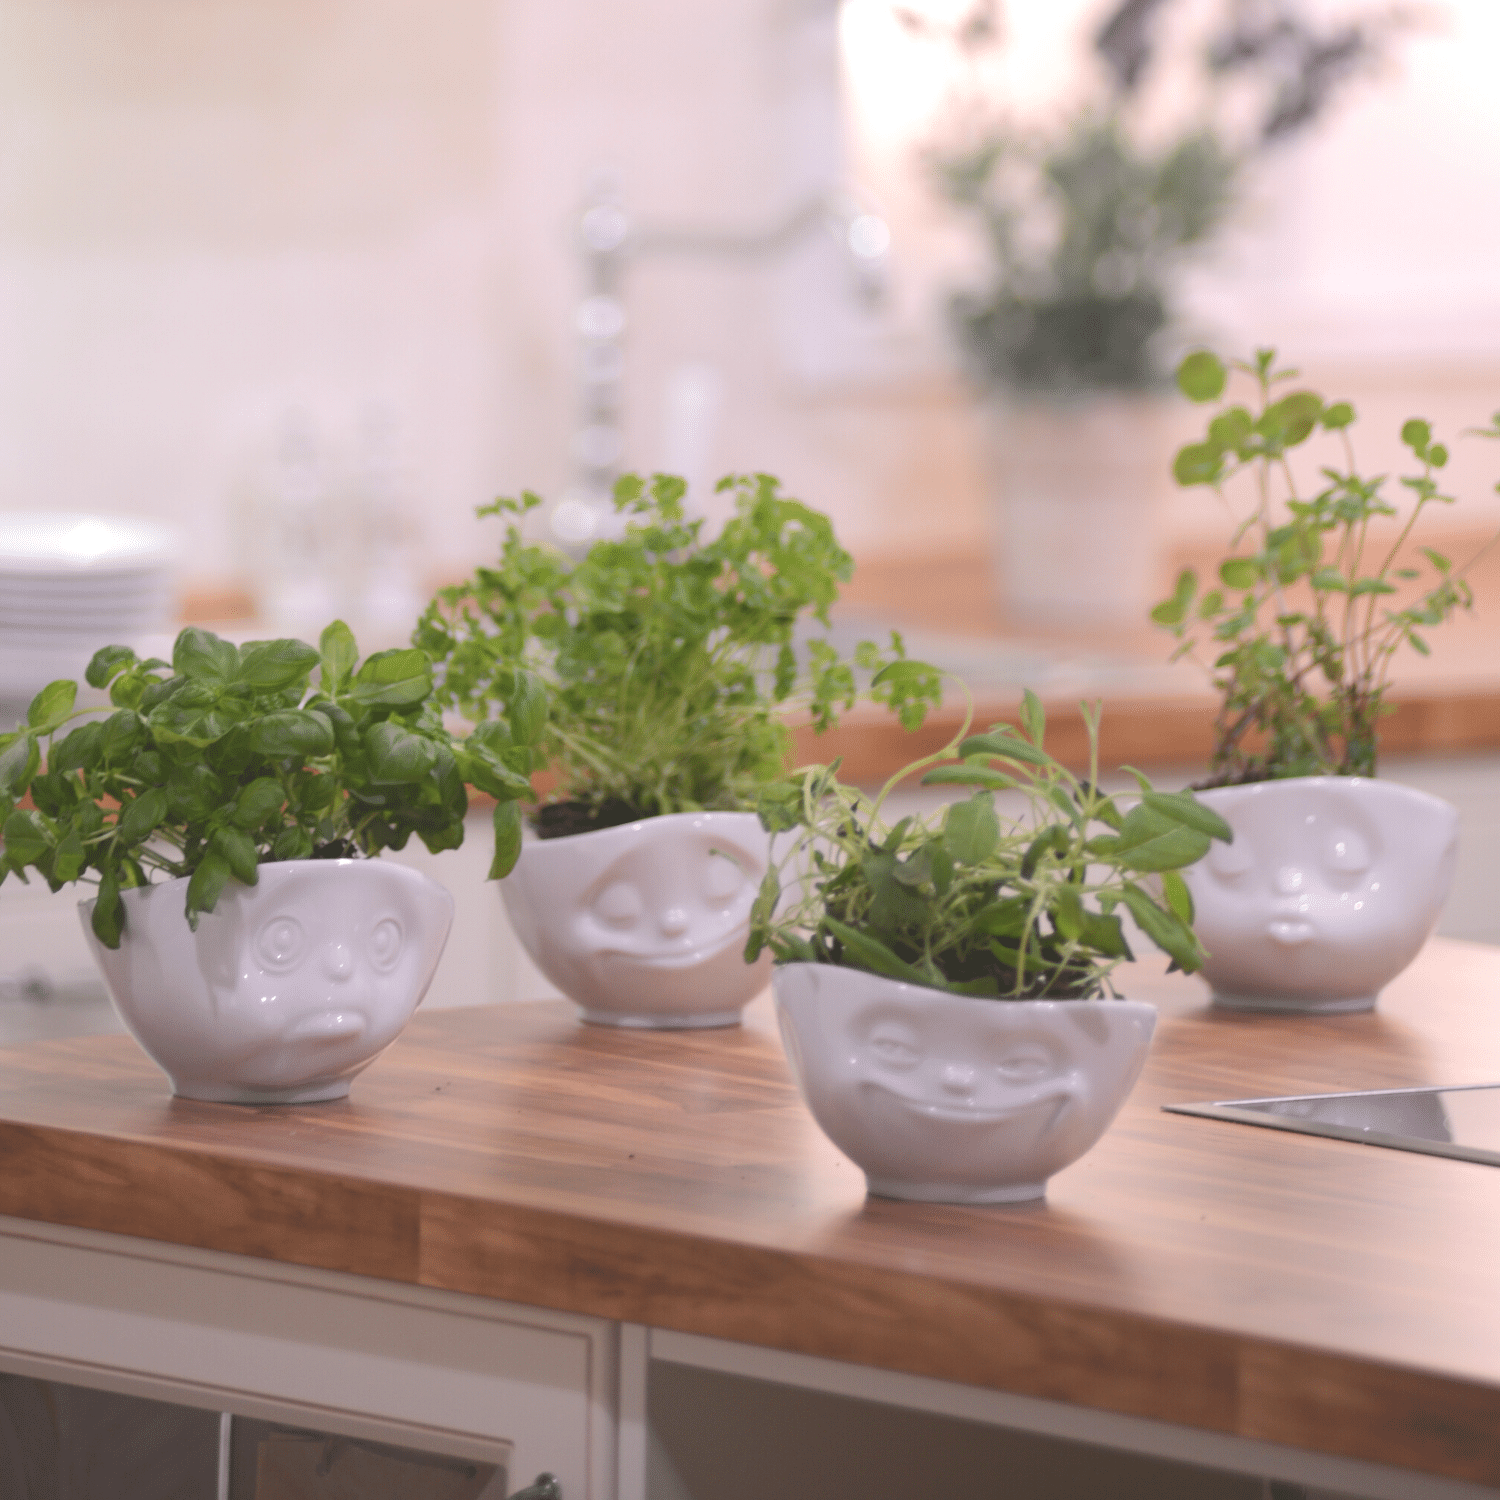 bols 500ml visage emotion cuisine herbes aromatiques dans vaisselle tassen